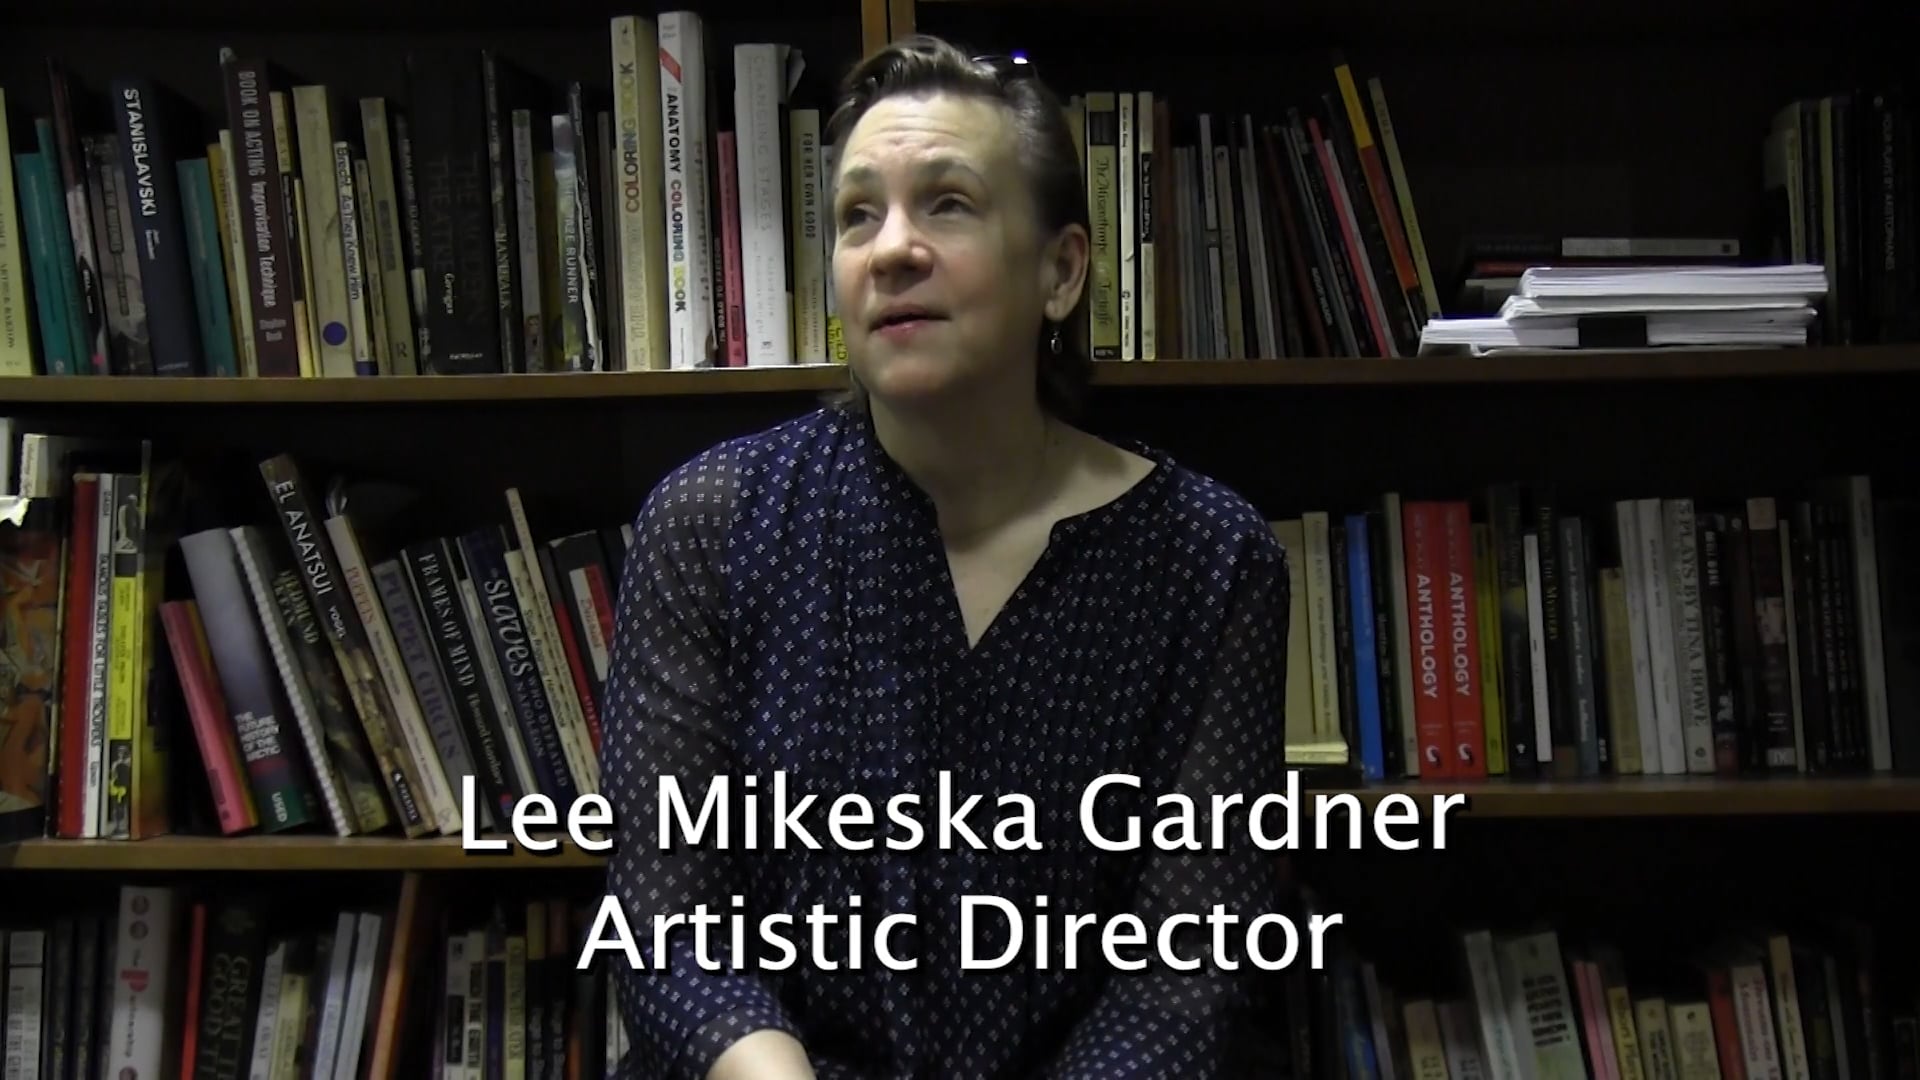 Central Figures with Lee Mikeska Gardner